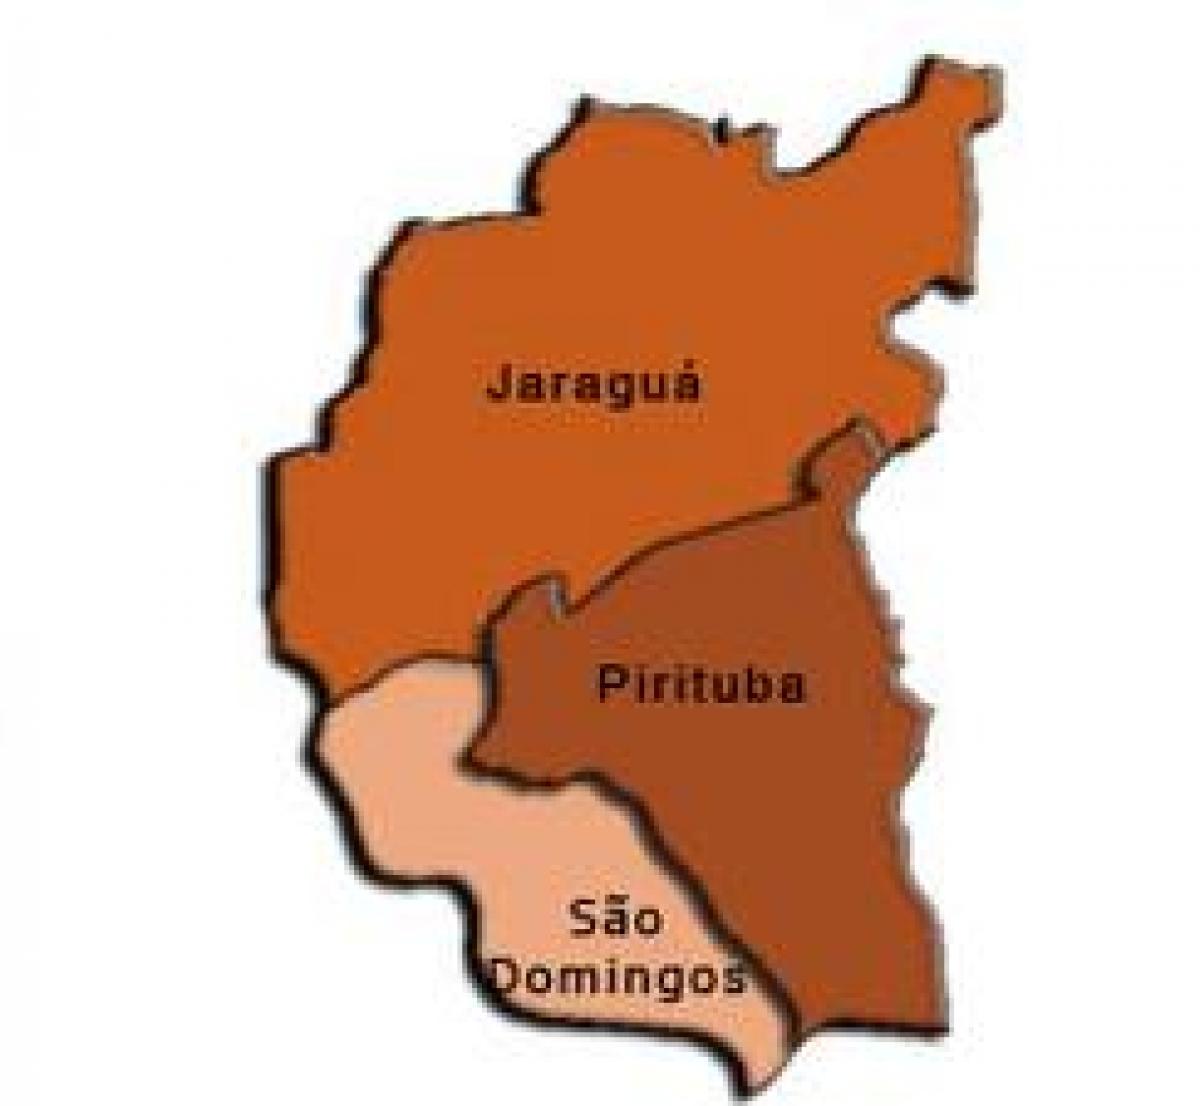 Kat jeyografik nan Pirituba-Jaraguá sub-prefecture